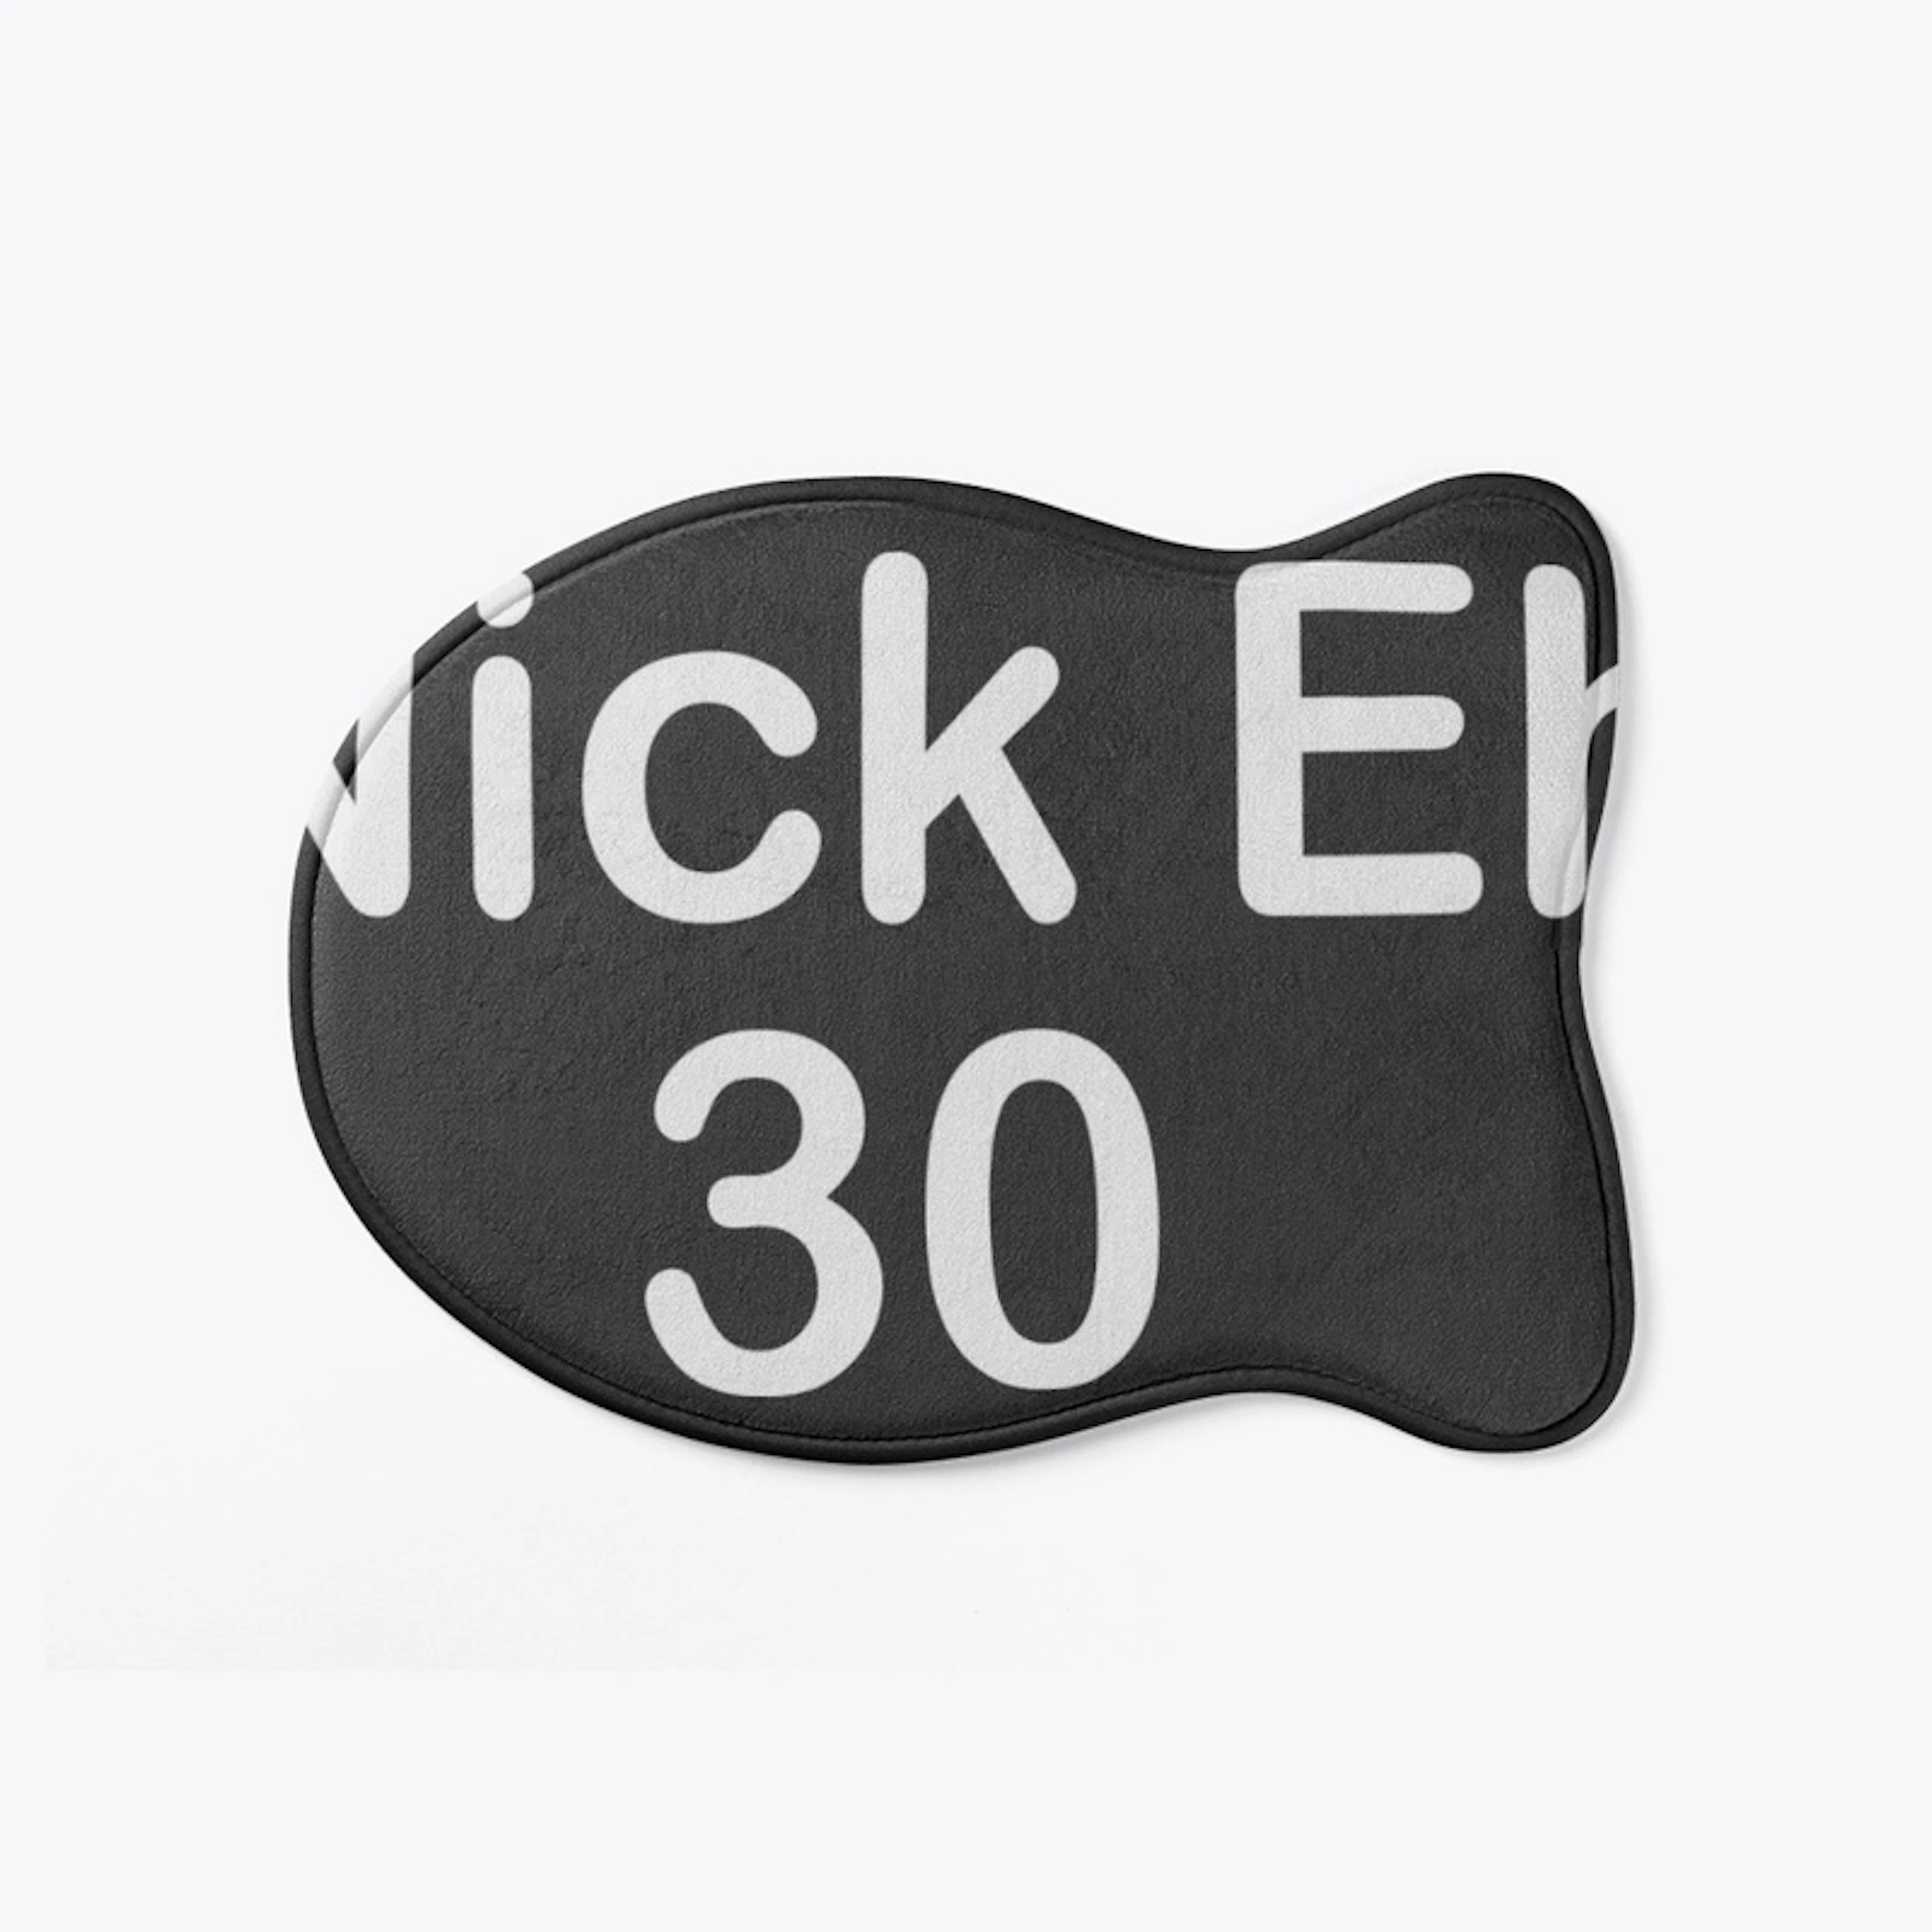 Nick Eh 30 Merch Logo